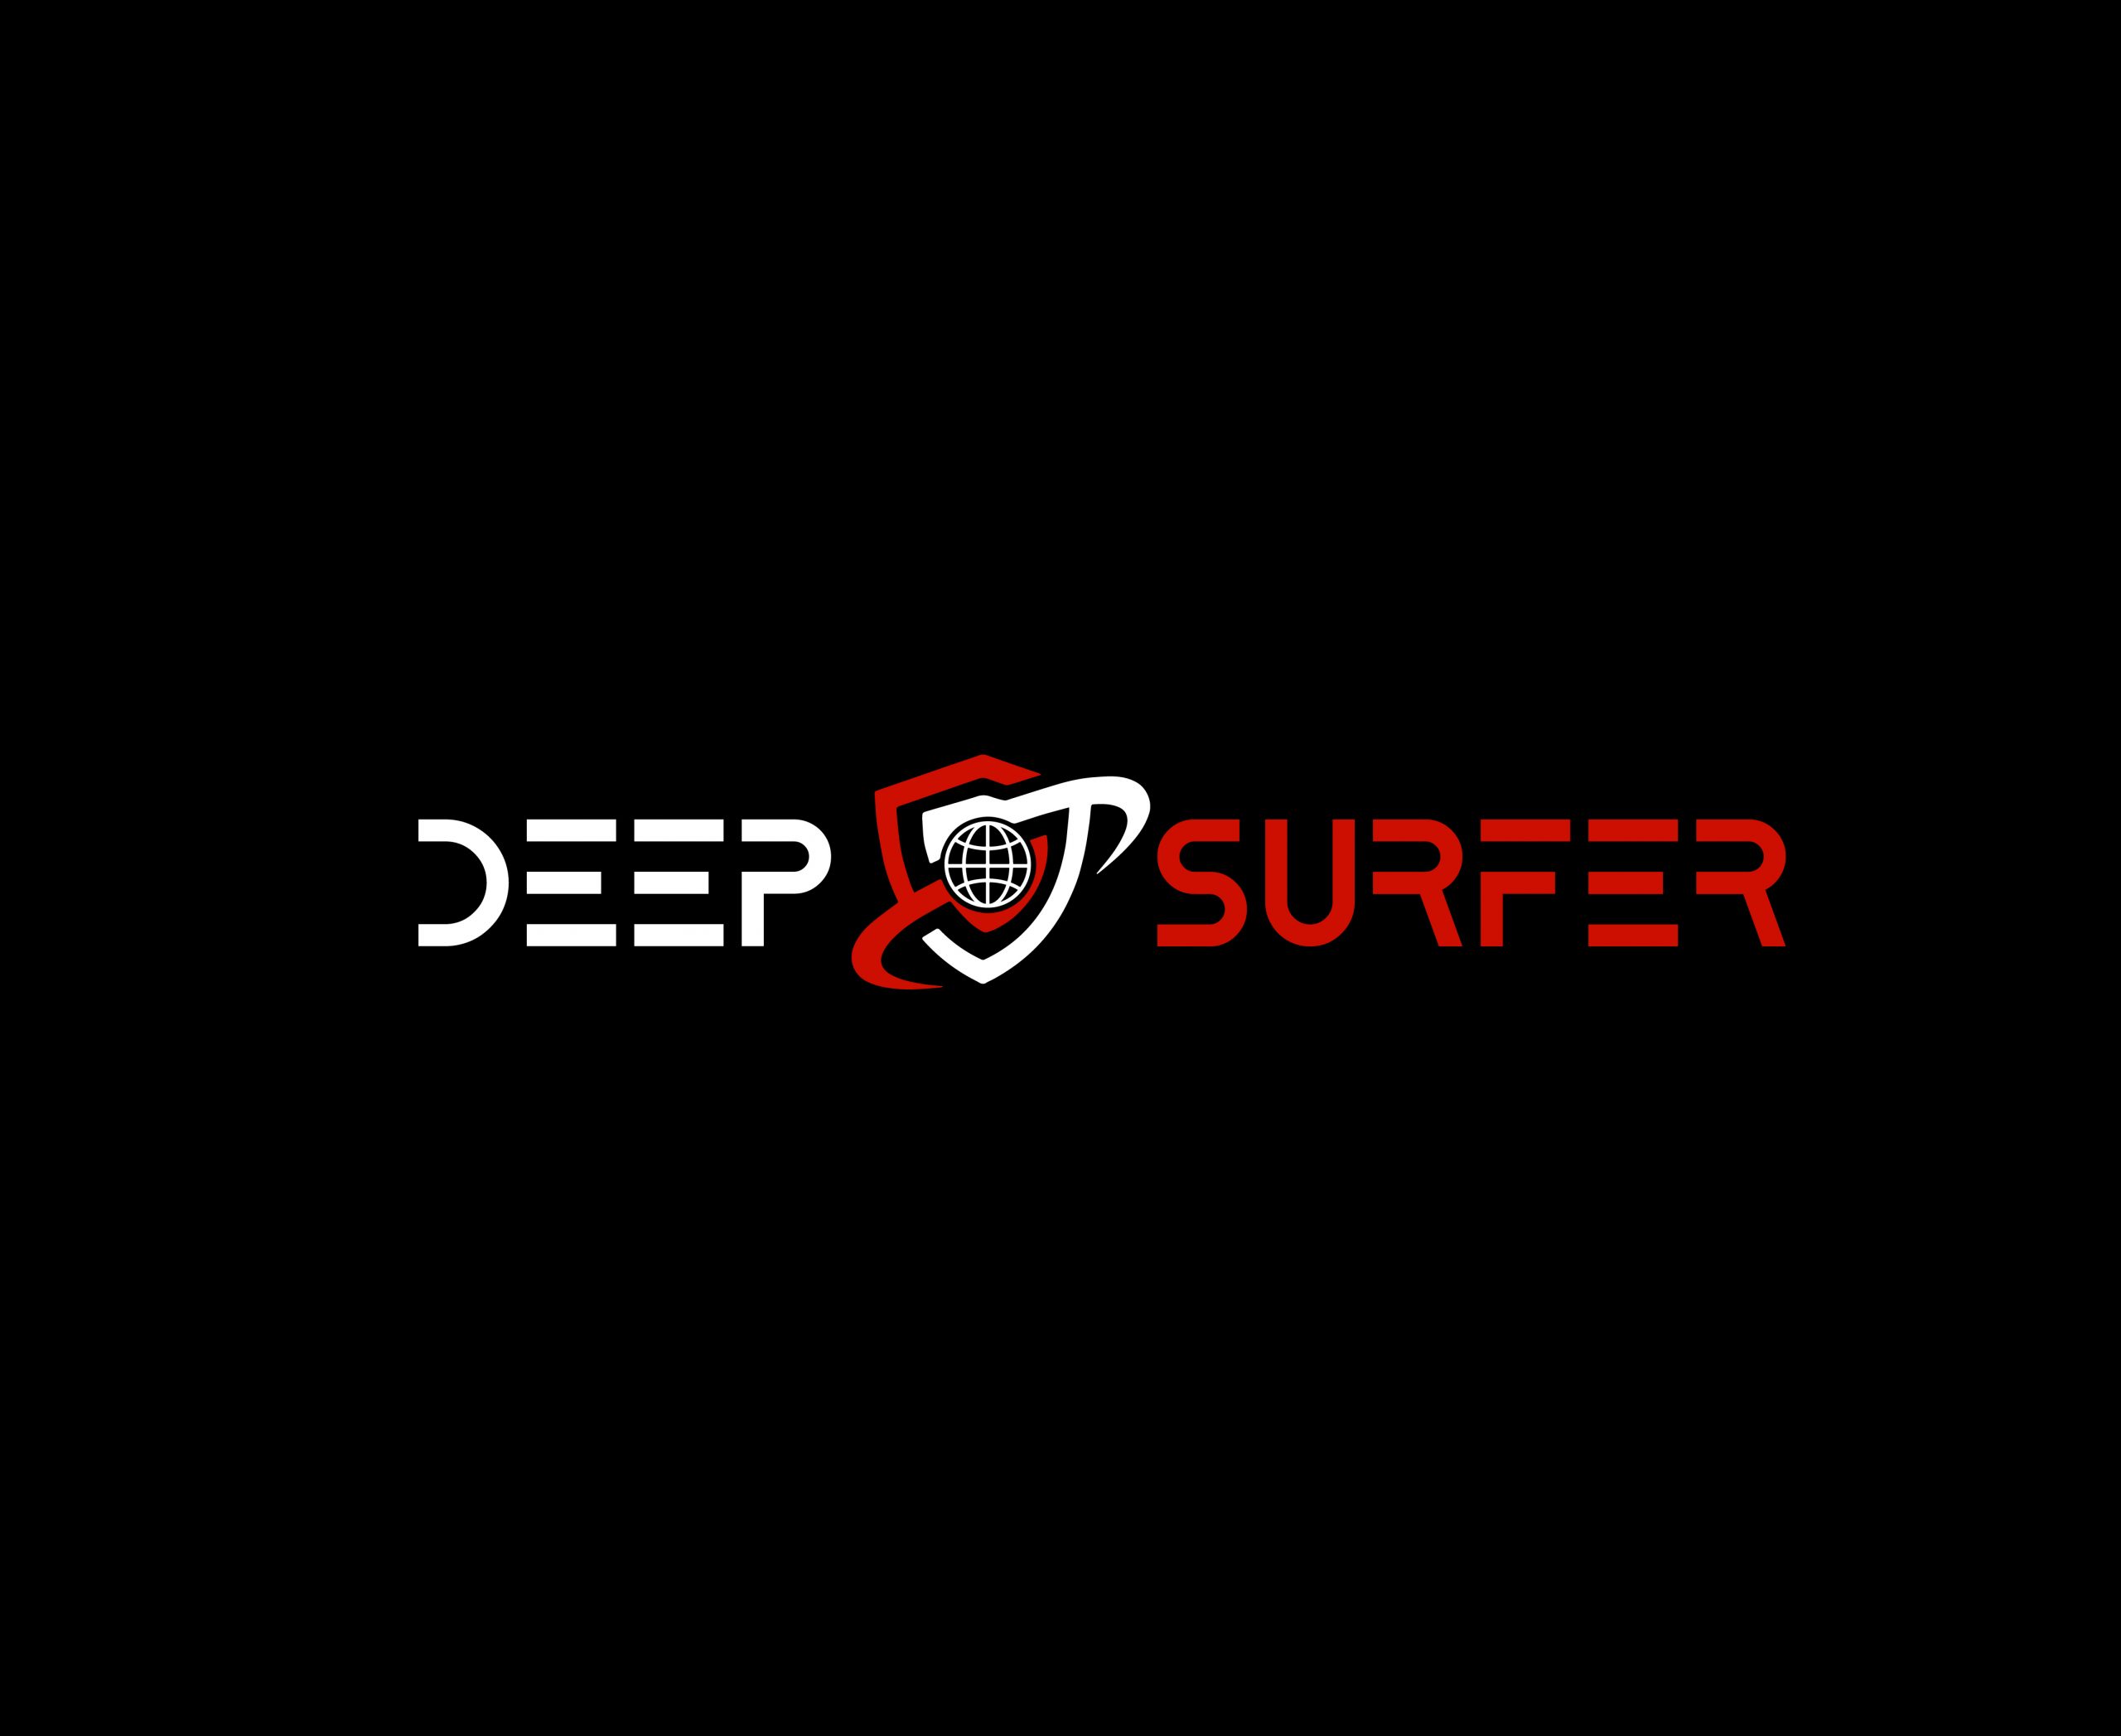 Deep surfer